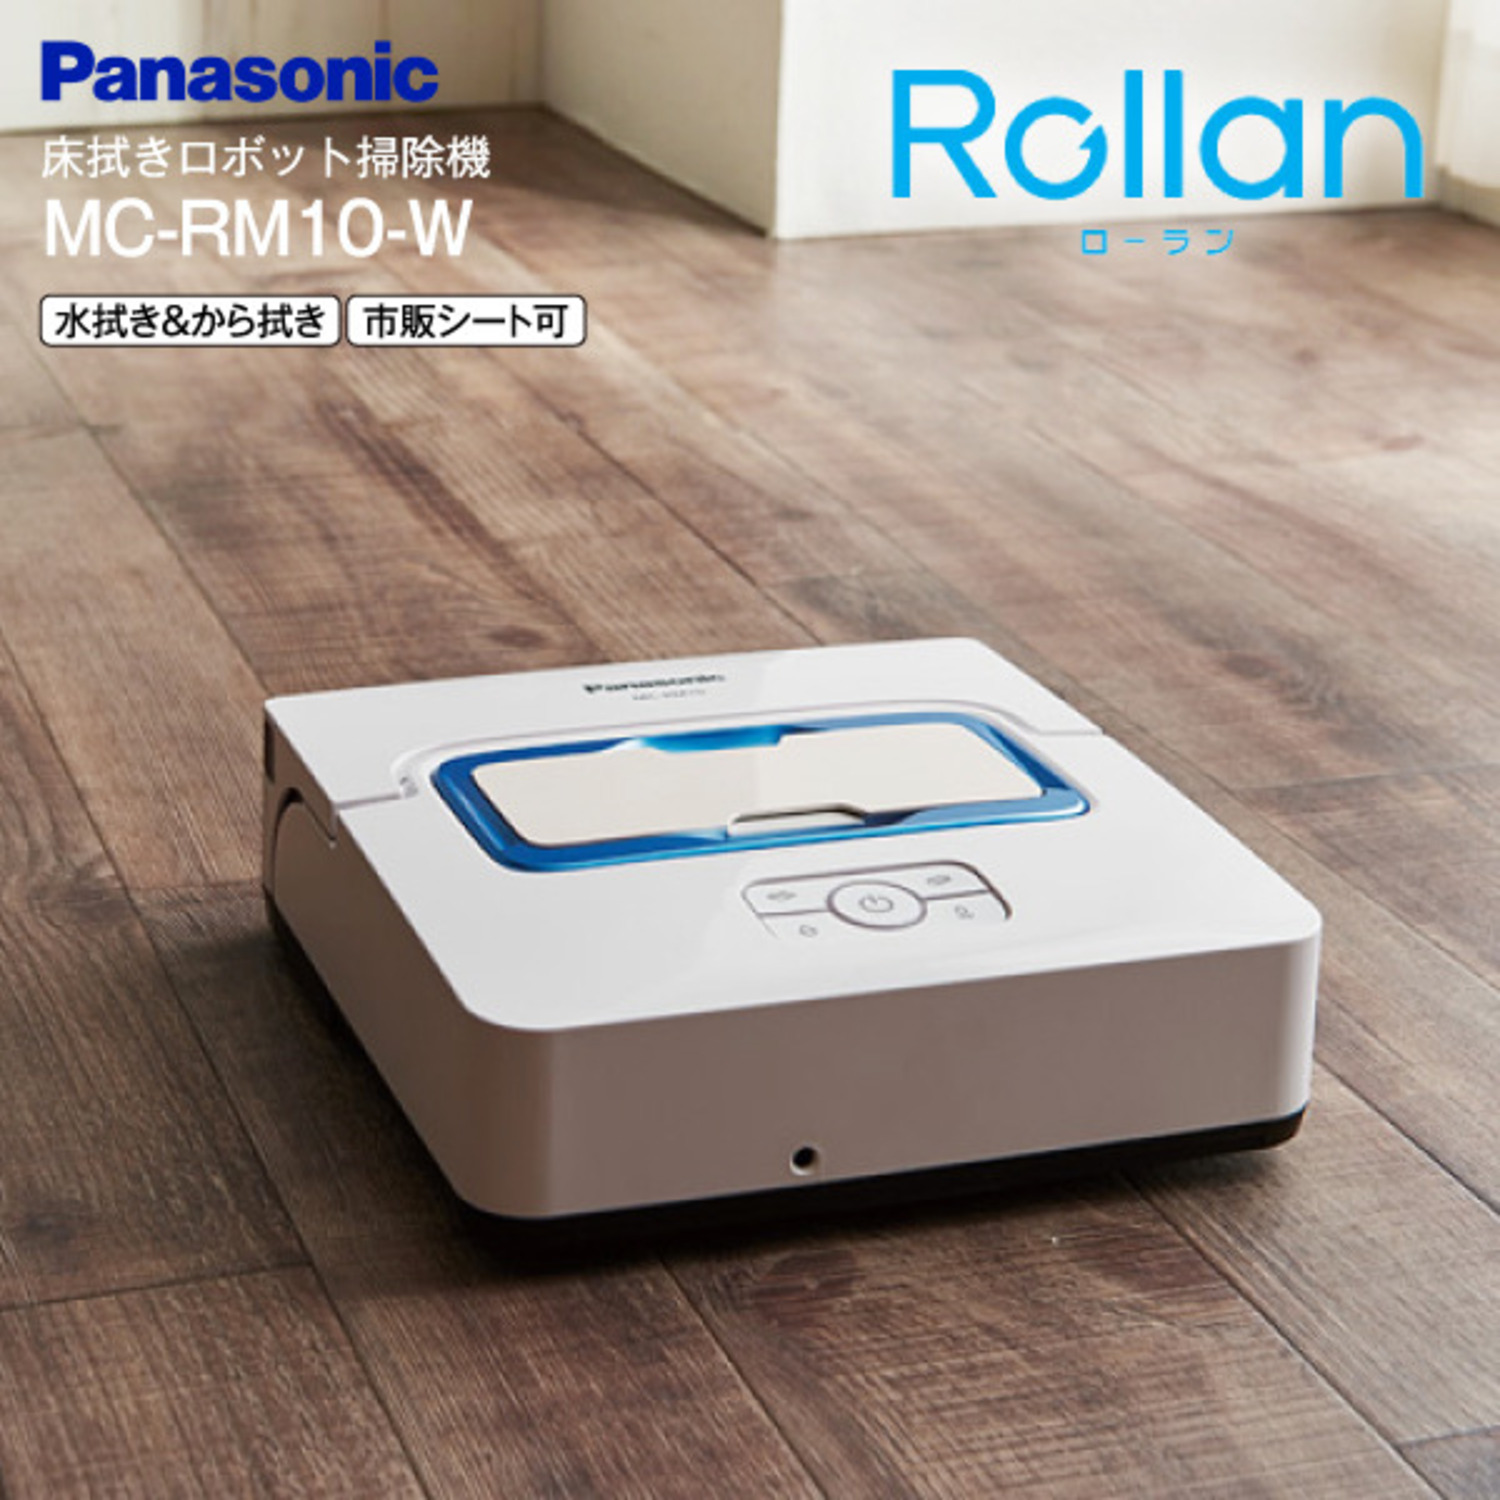 Panasonic MC-RM10-W ローランパナソニック床拭きロボット掃除機 - 掃除機